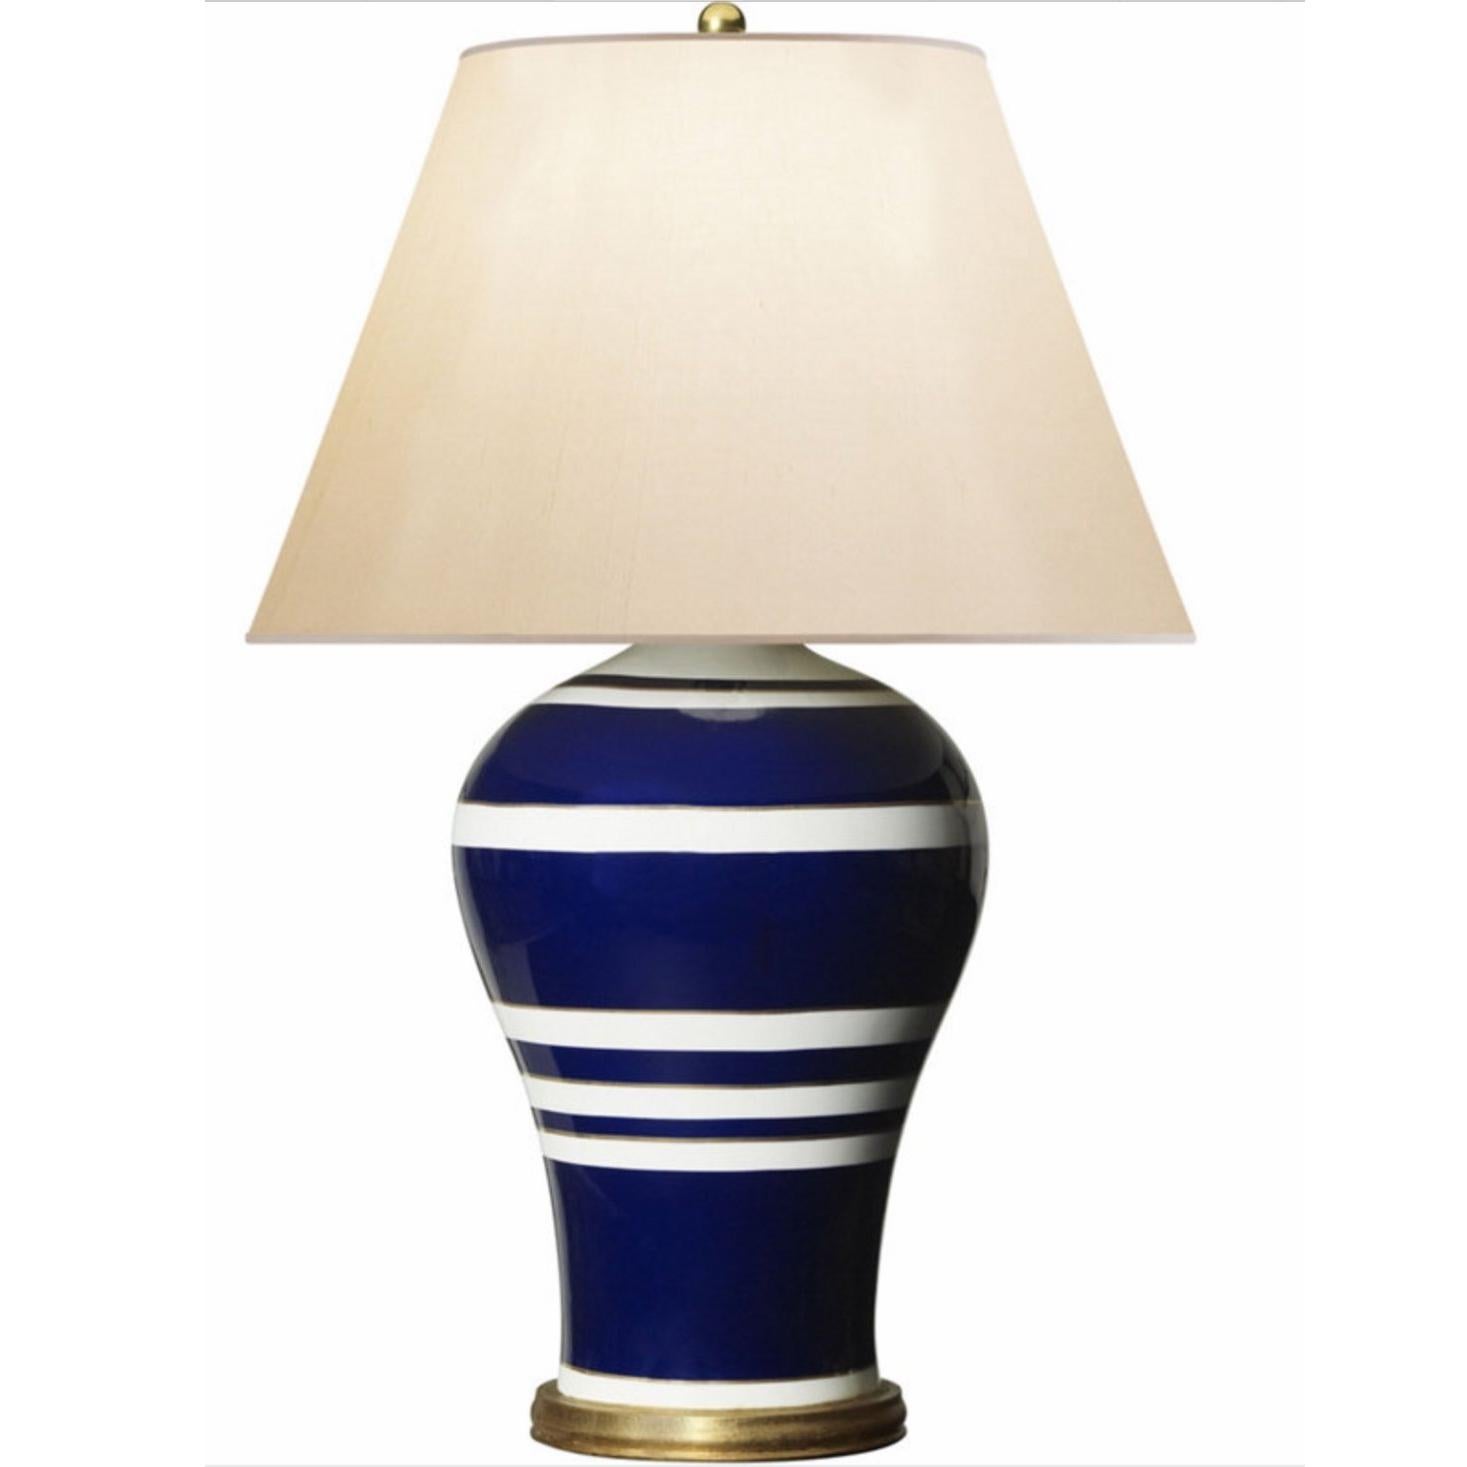 Ralph Lauren Table Lamp Glazed Porcelain Blue and White in Modern Style